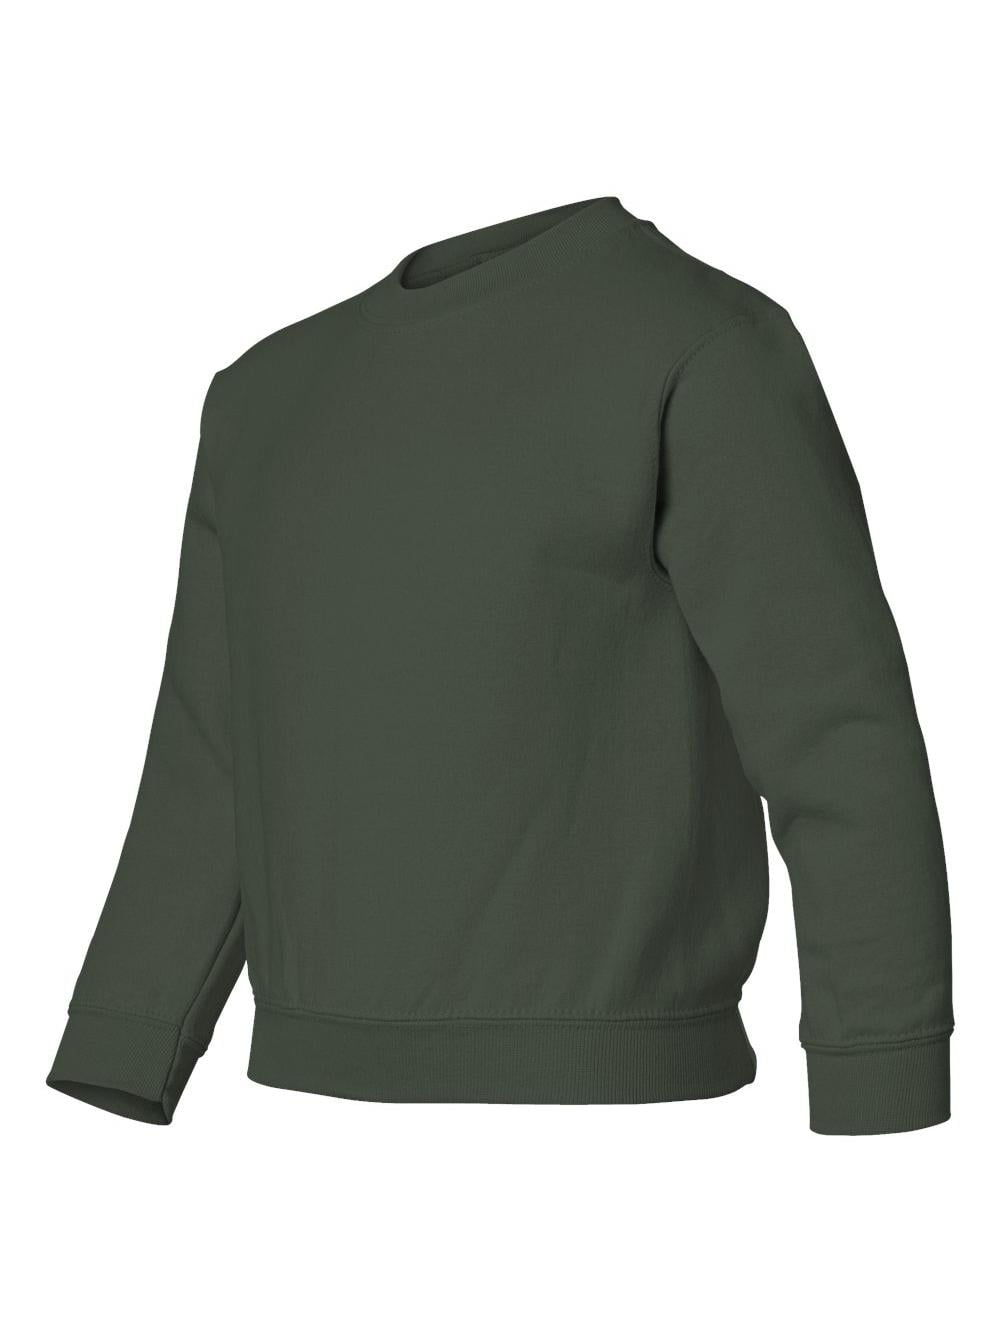 Gildan - Heavy Blend Youth Sweatshirt - 18000B - Forest - Size: S ...